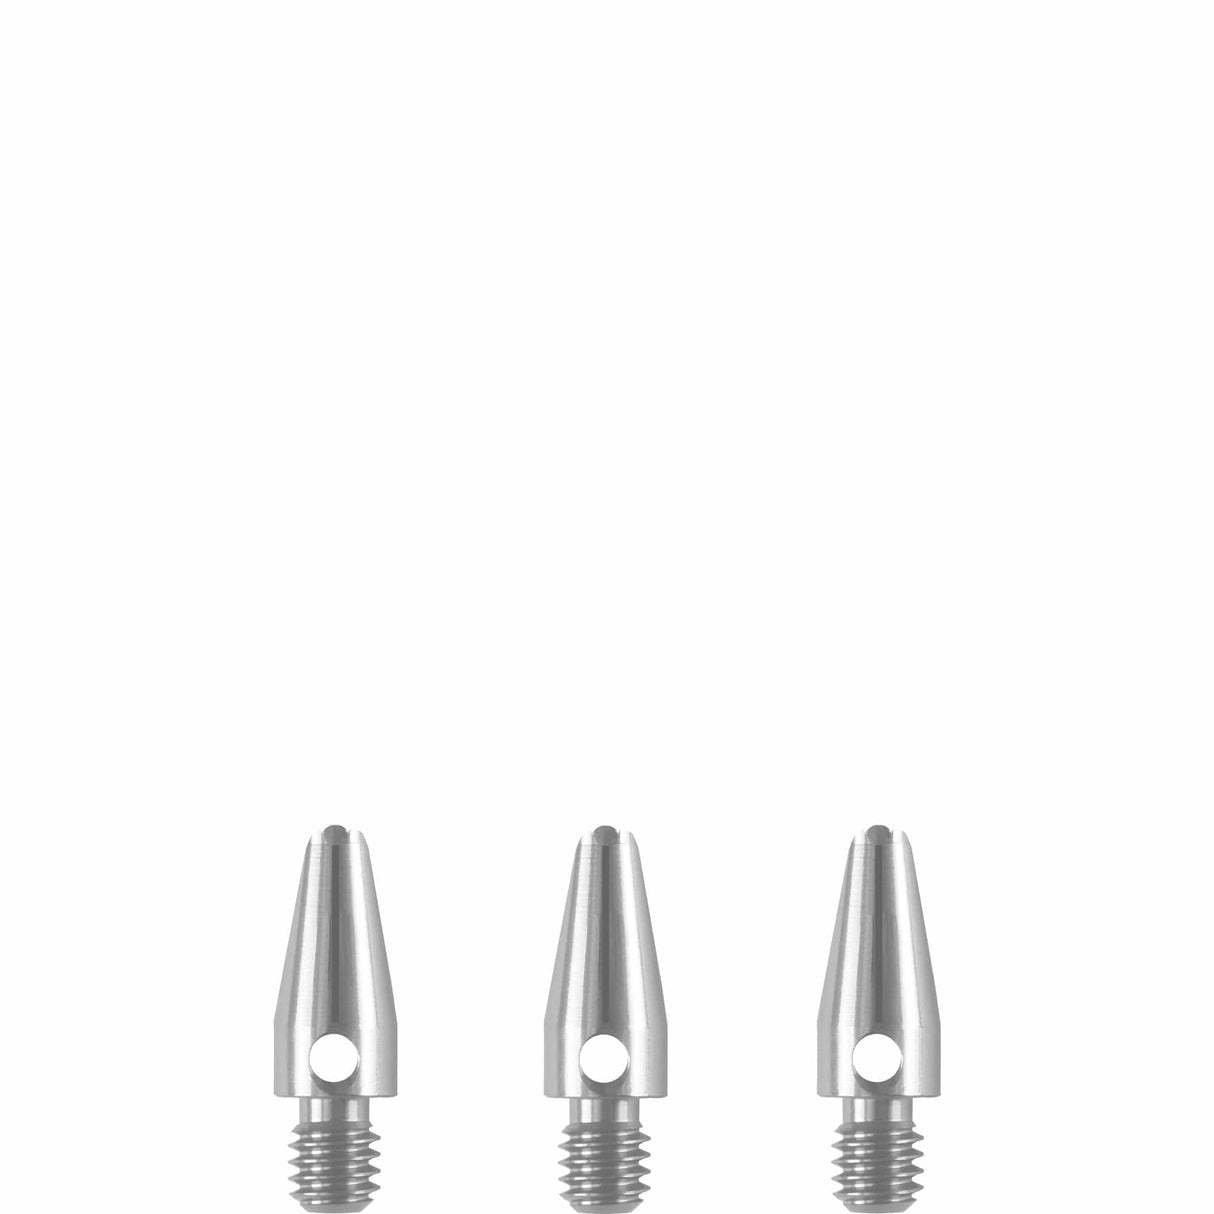 Designa Aluminium Shafts - Metal Dart Stems - Silver Micro